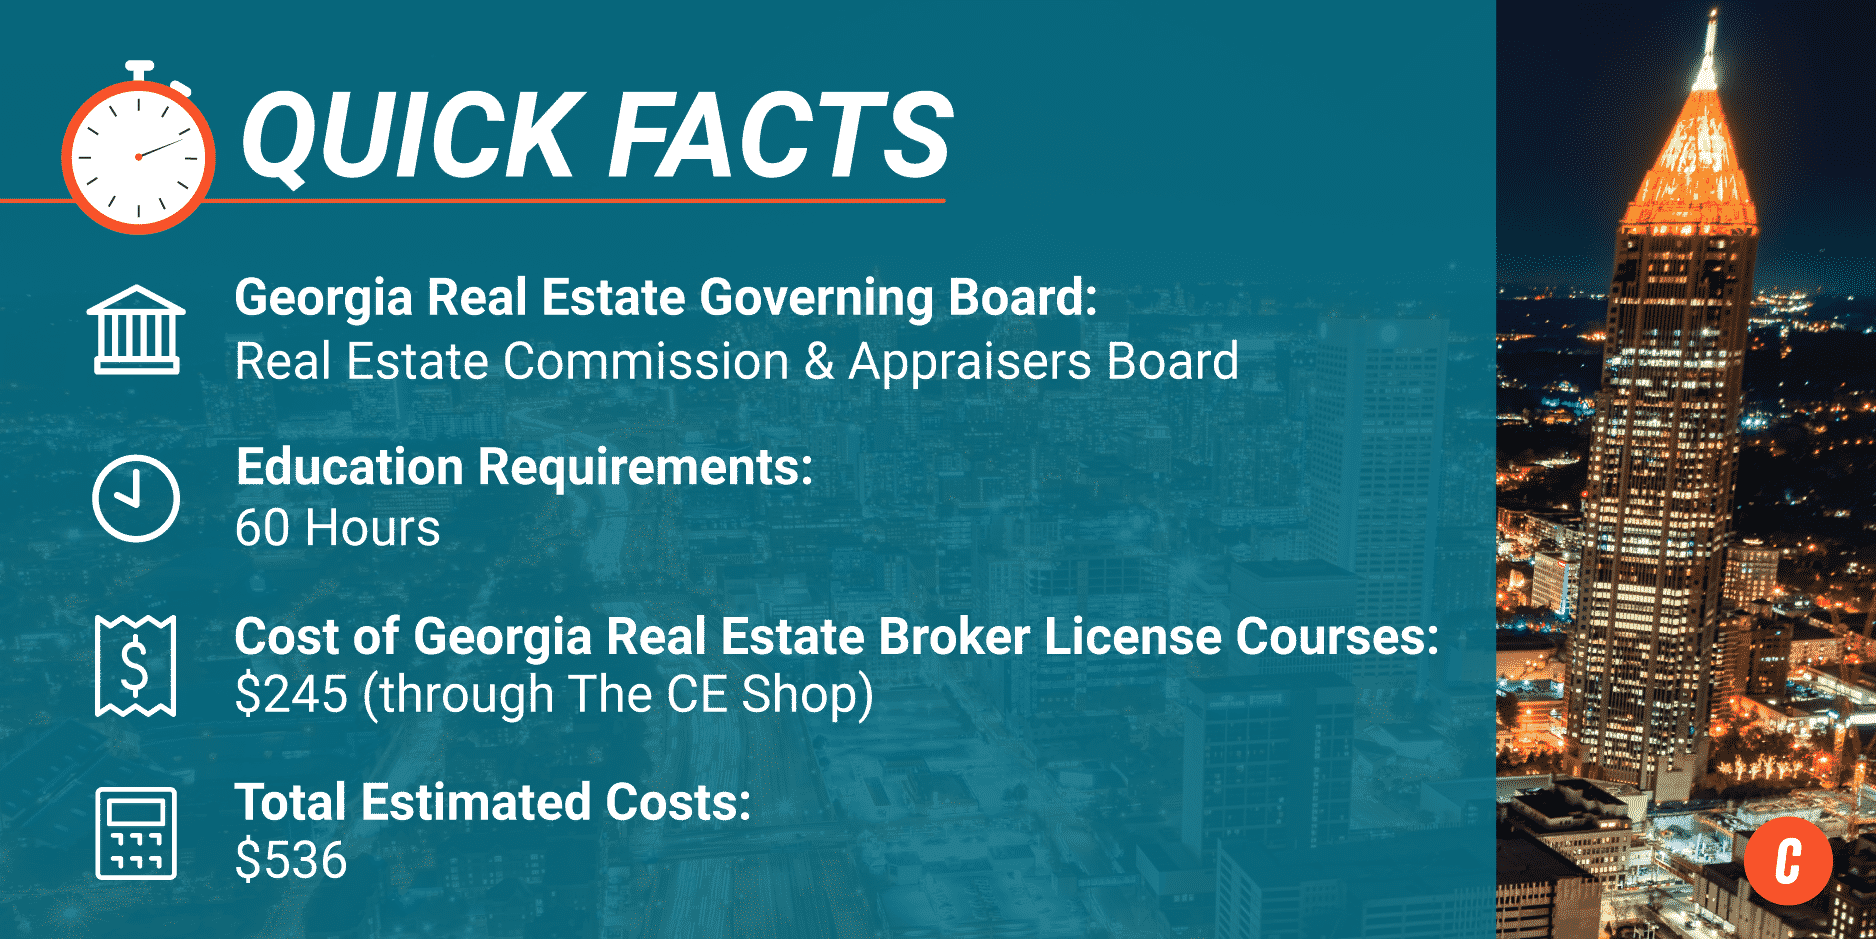 How to Get a Georgia Real Estate License